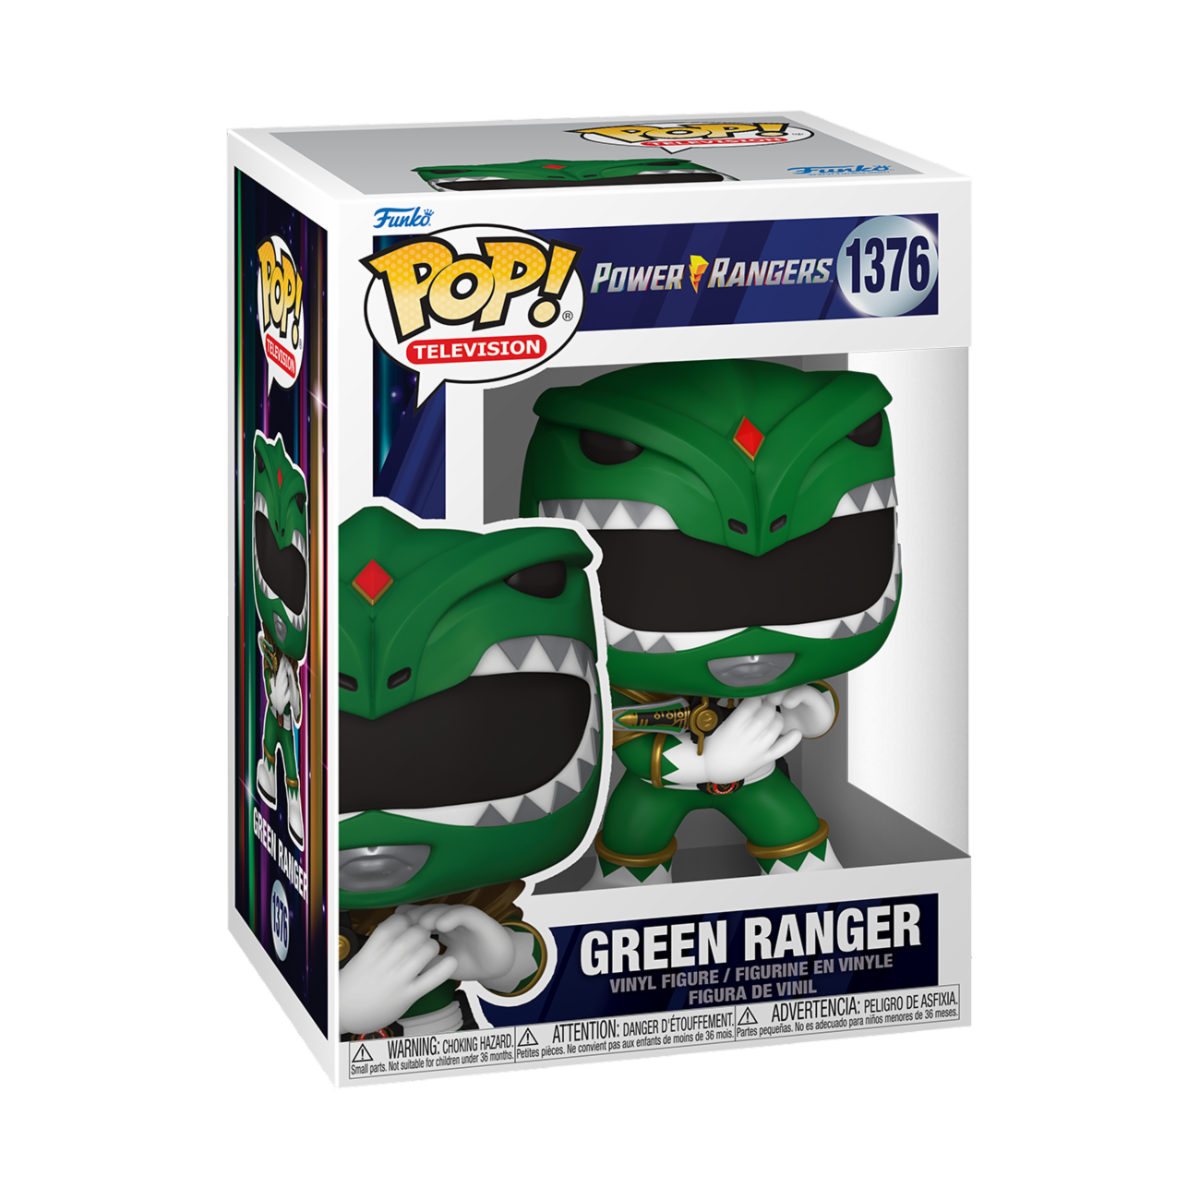 Power Rangers - Green Ranger (1376)